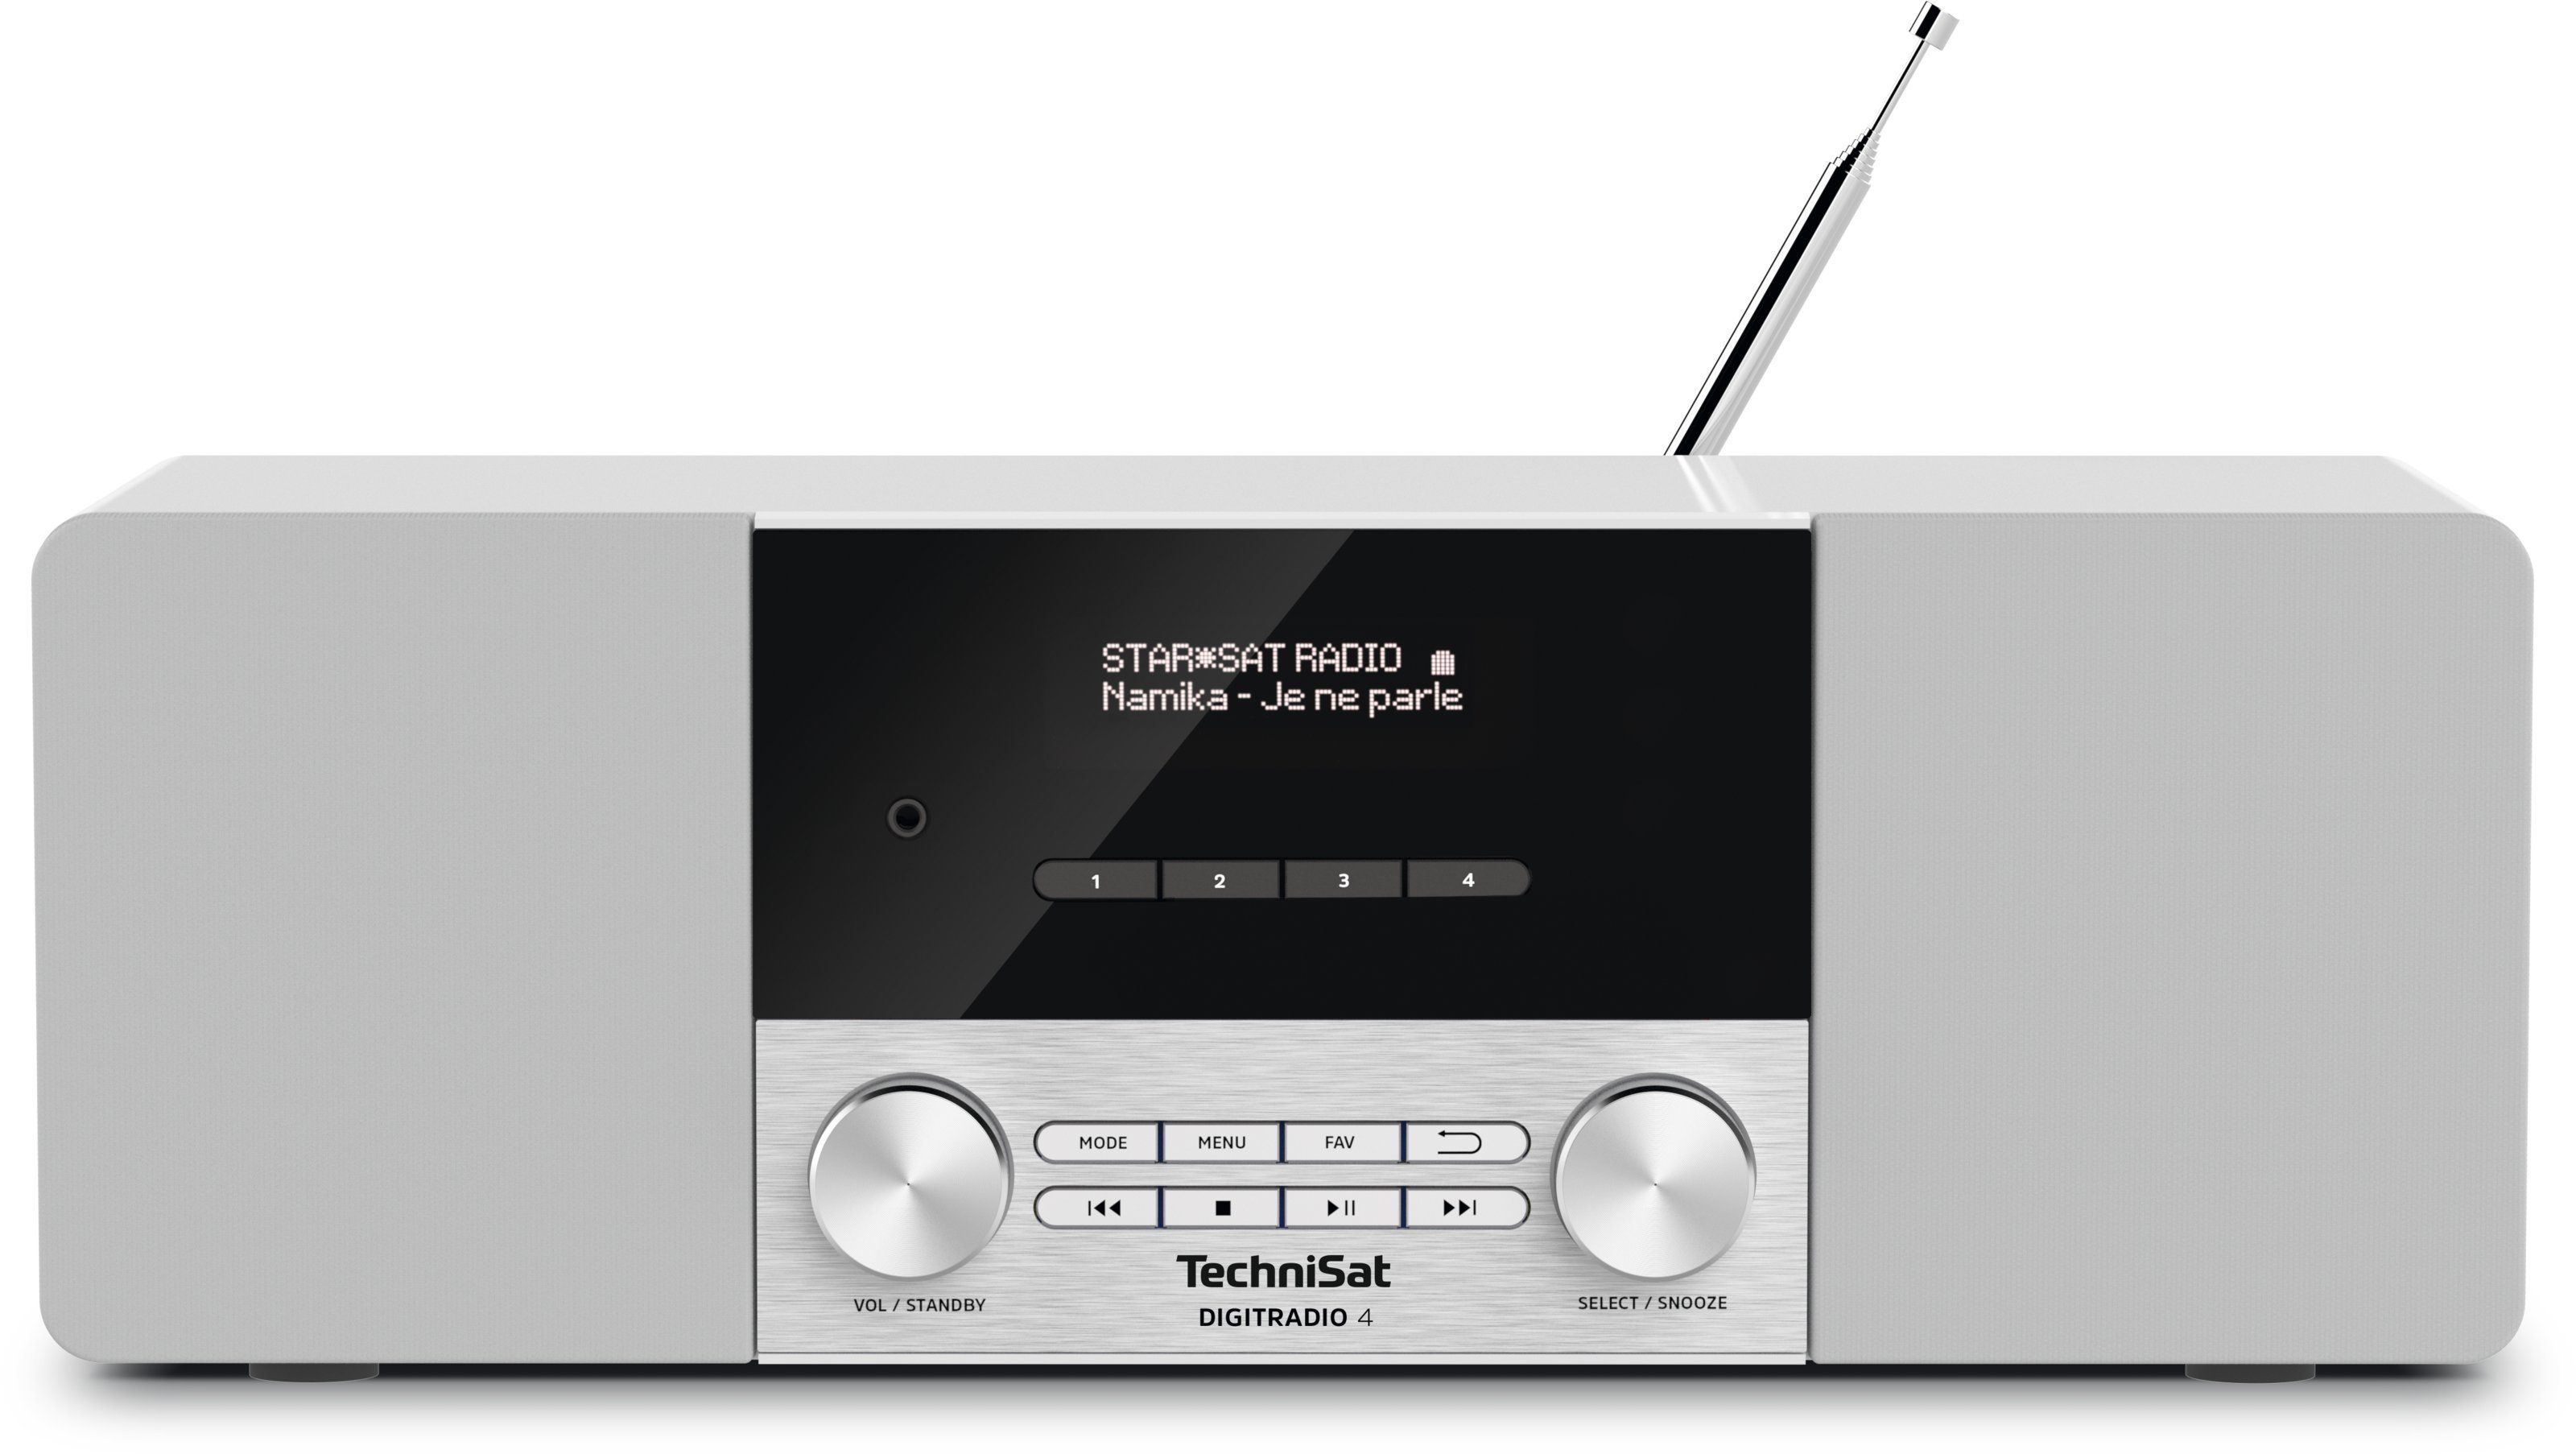 DIGITRADIO Bluetooth-Audiostreaming, (DAB), (DAB) Hochwertiges 4 W, UKW, TechniSat Equalizer, Weiß 20,00 Digitalradio (Digitalradio OLED-Display, Favoritenspeicher)